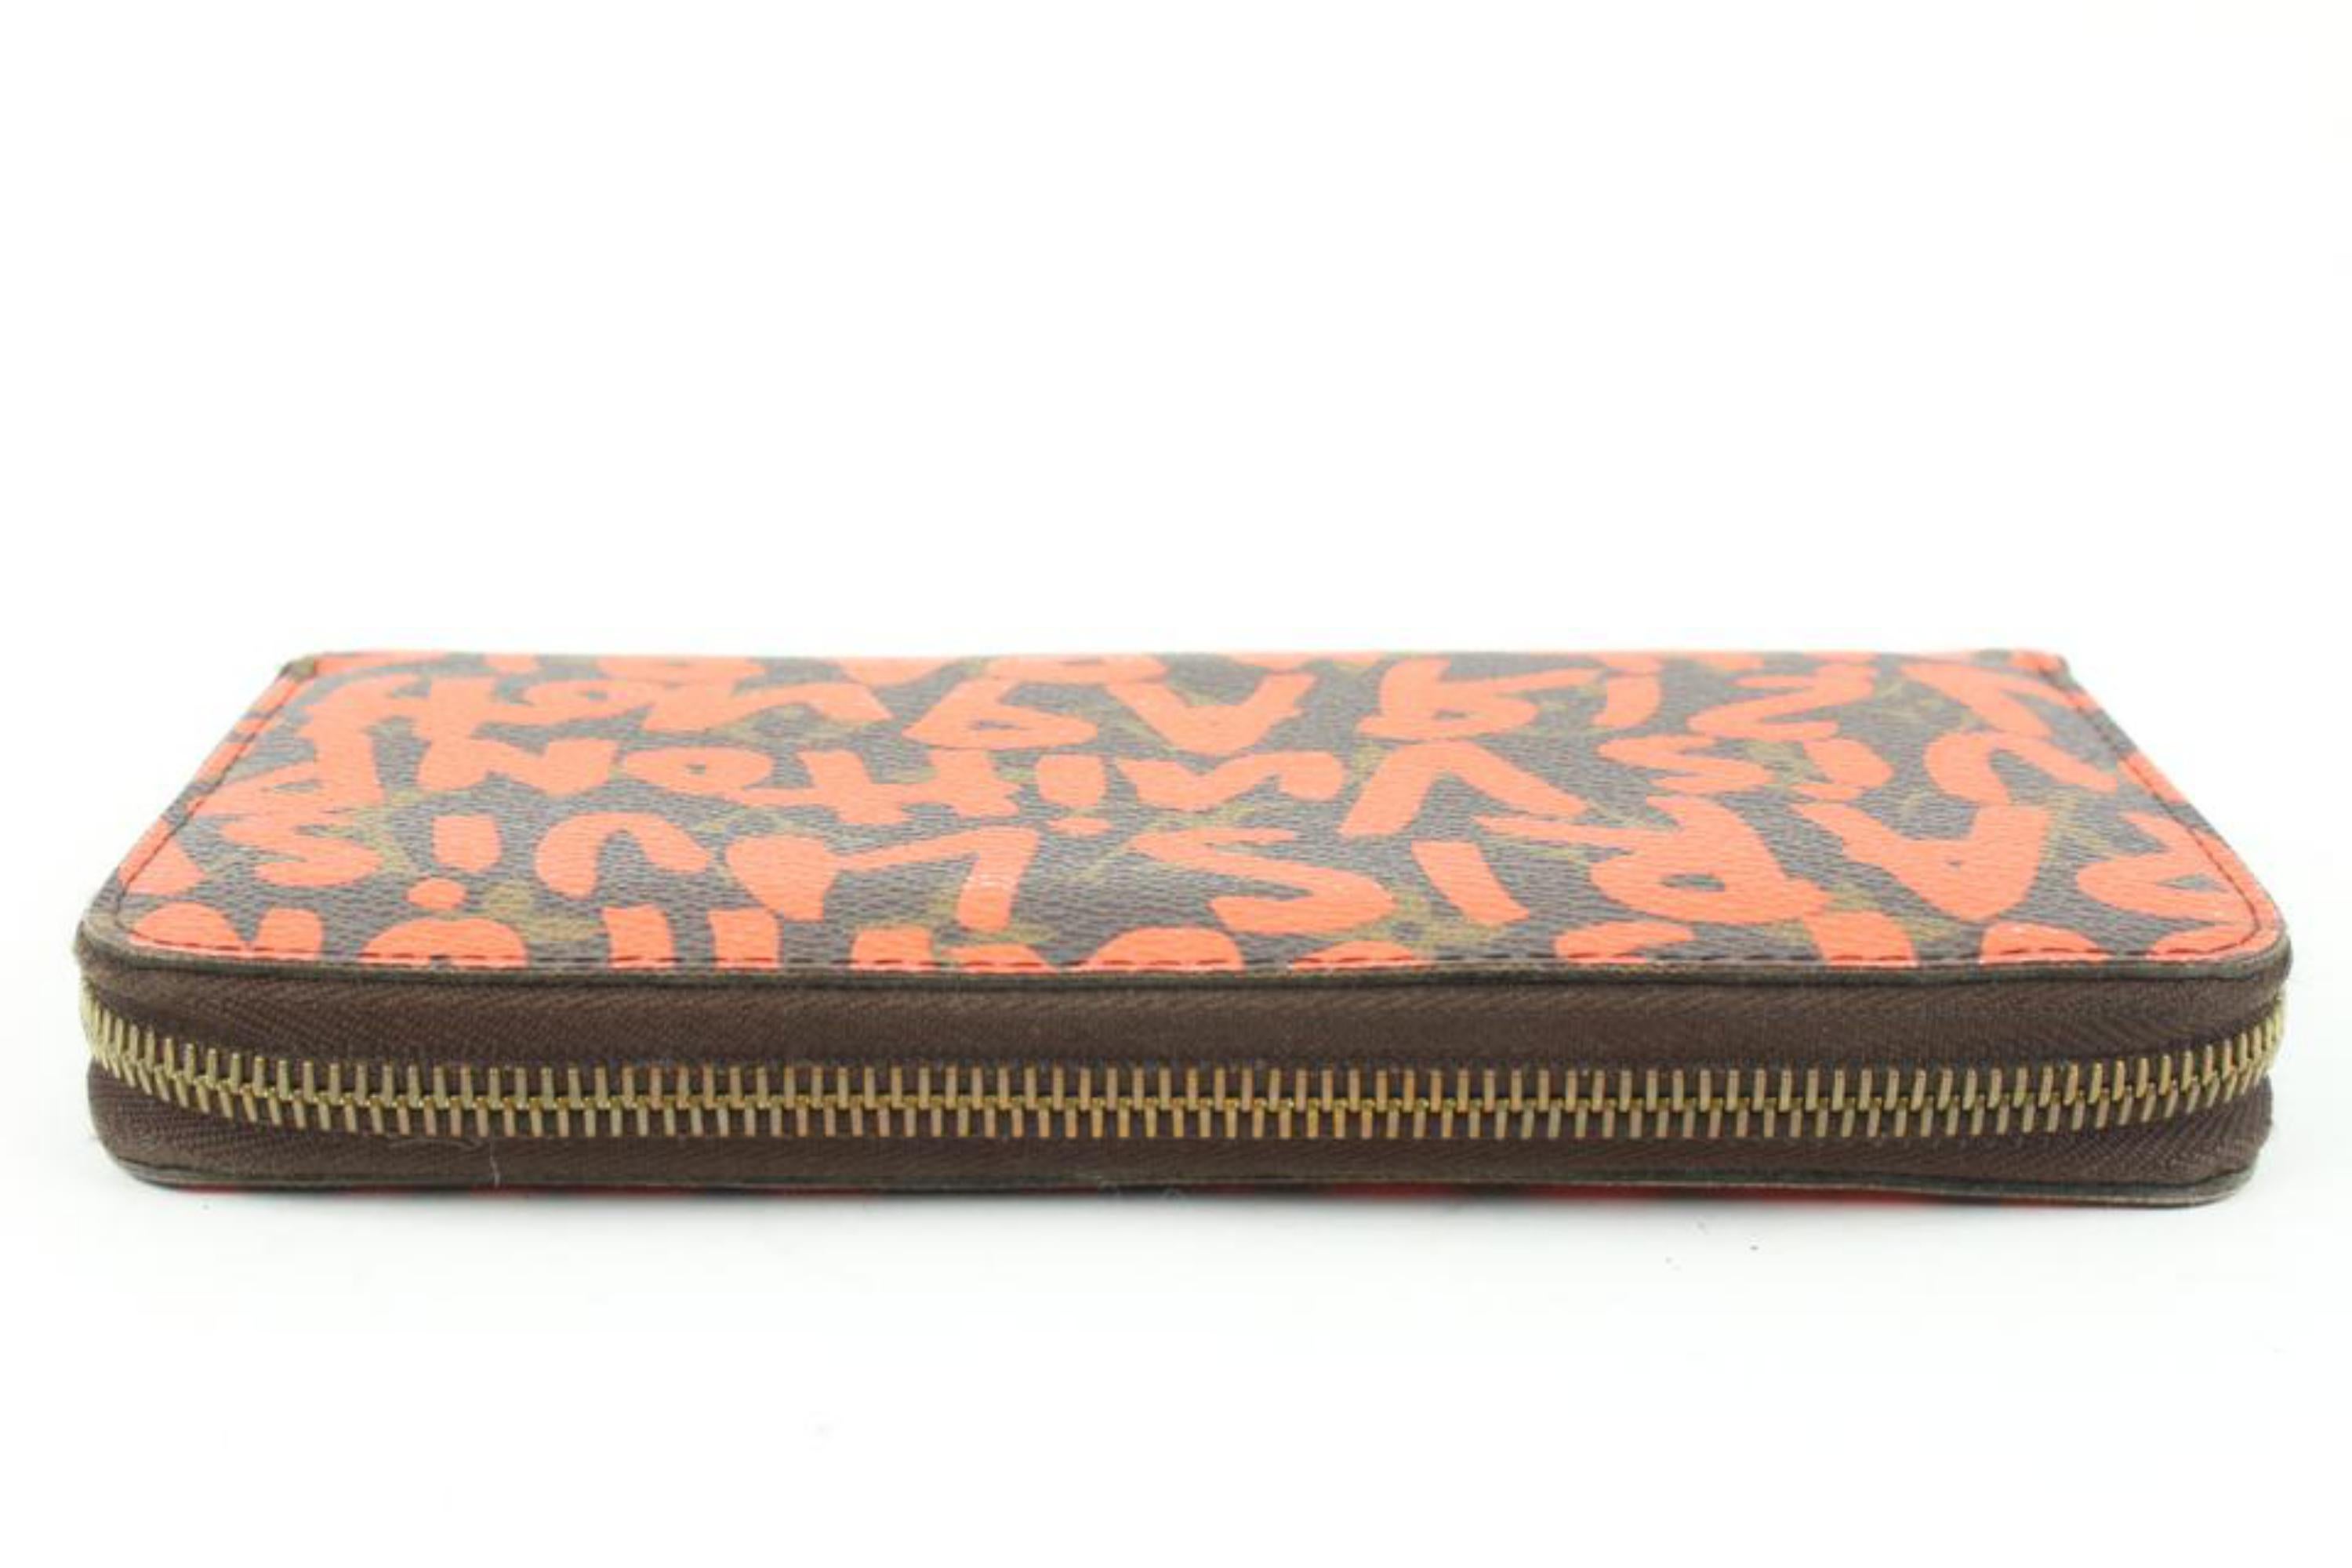 Louis Vuitton billfold wallet, 2008 Damier Ebene pattern, brown coated  canvas - general for sale - by owner - craigslist